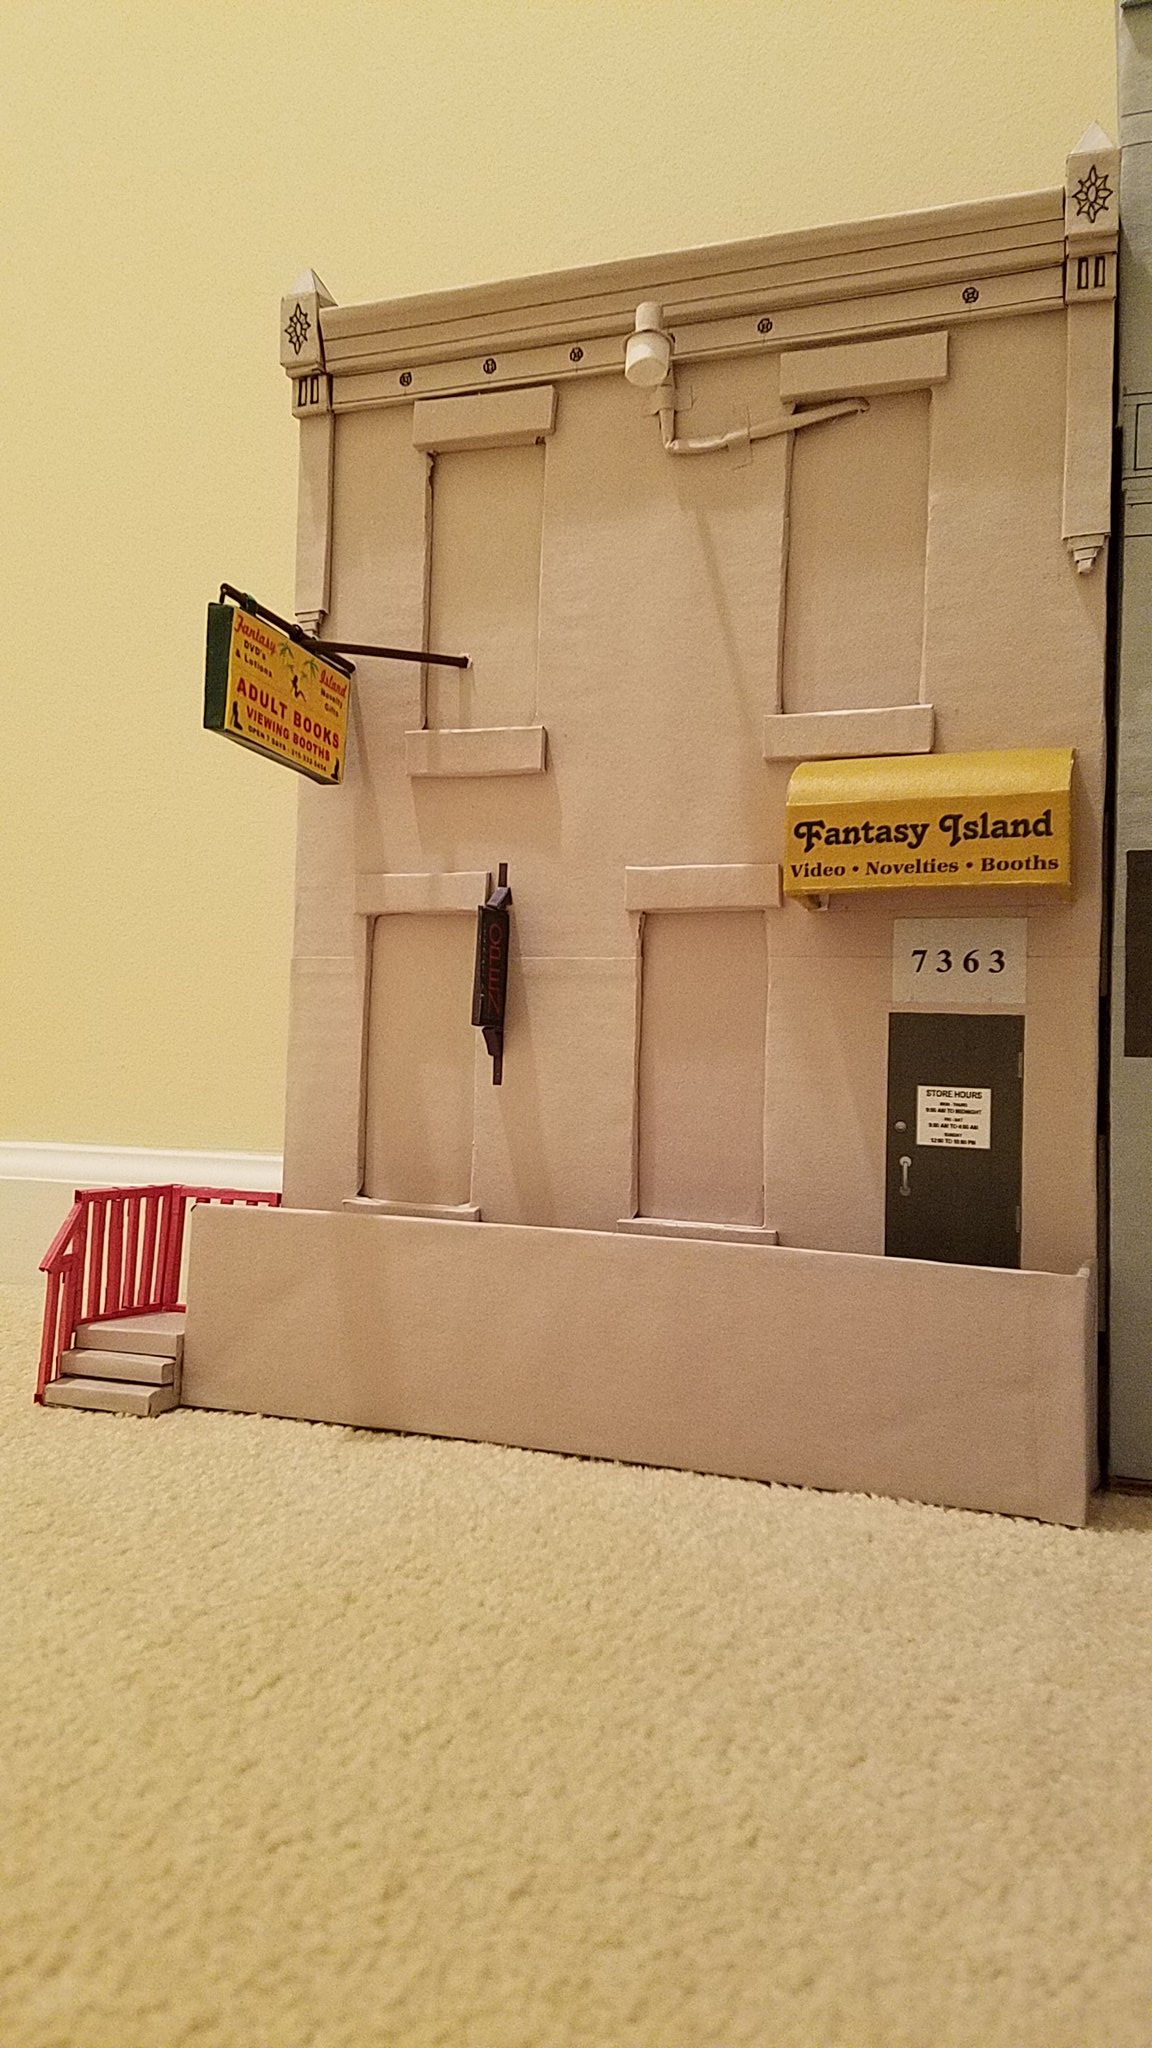 A model of Fantasy Island Book Store